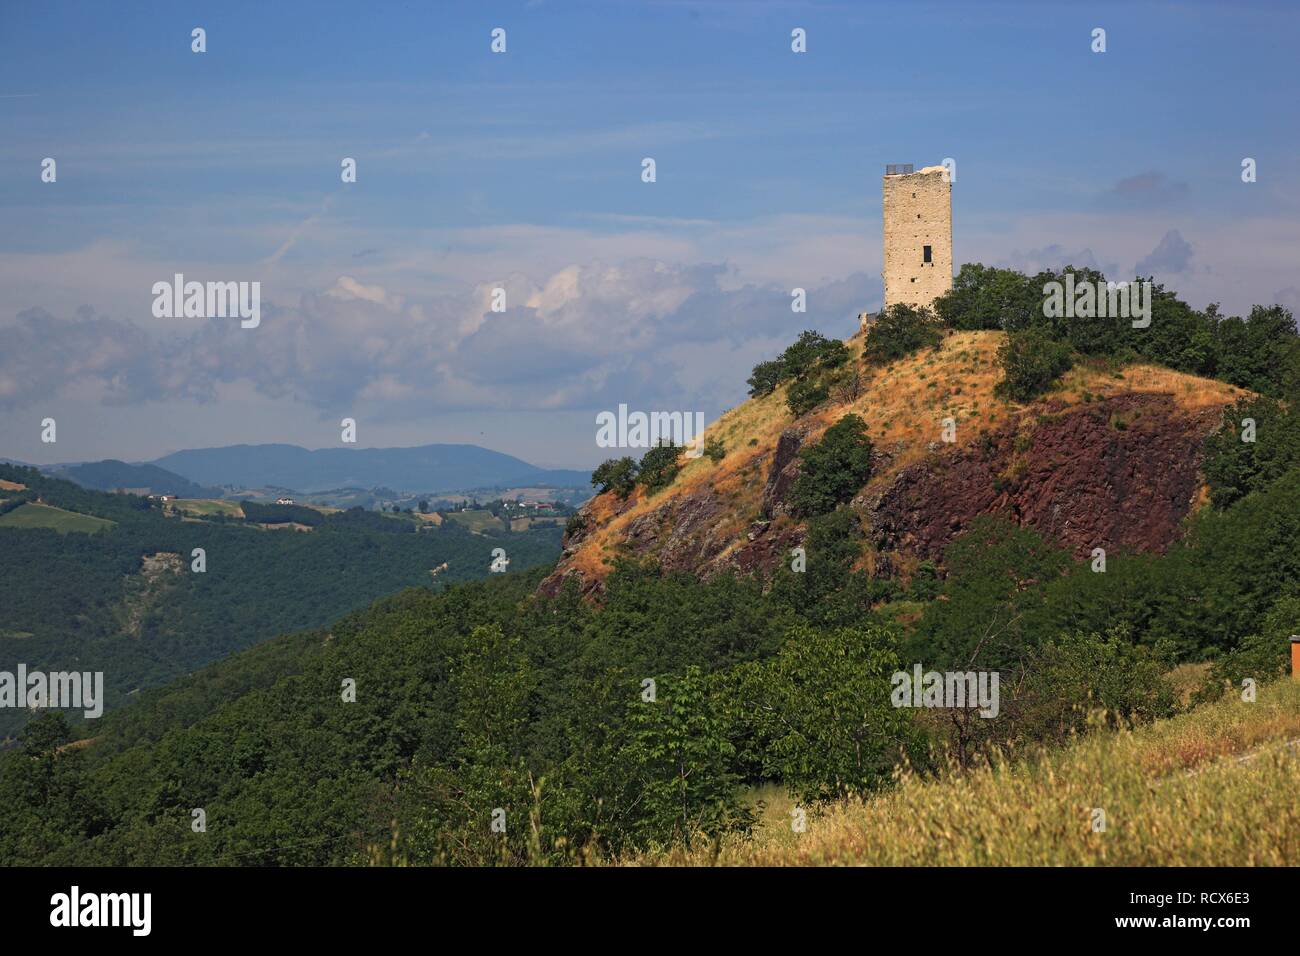 Wachturm von Castello di Rossena Schloss, in der Nähe von Canossa, Emilia Romagna, Italien, Europa Stockfoto